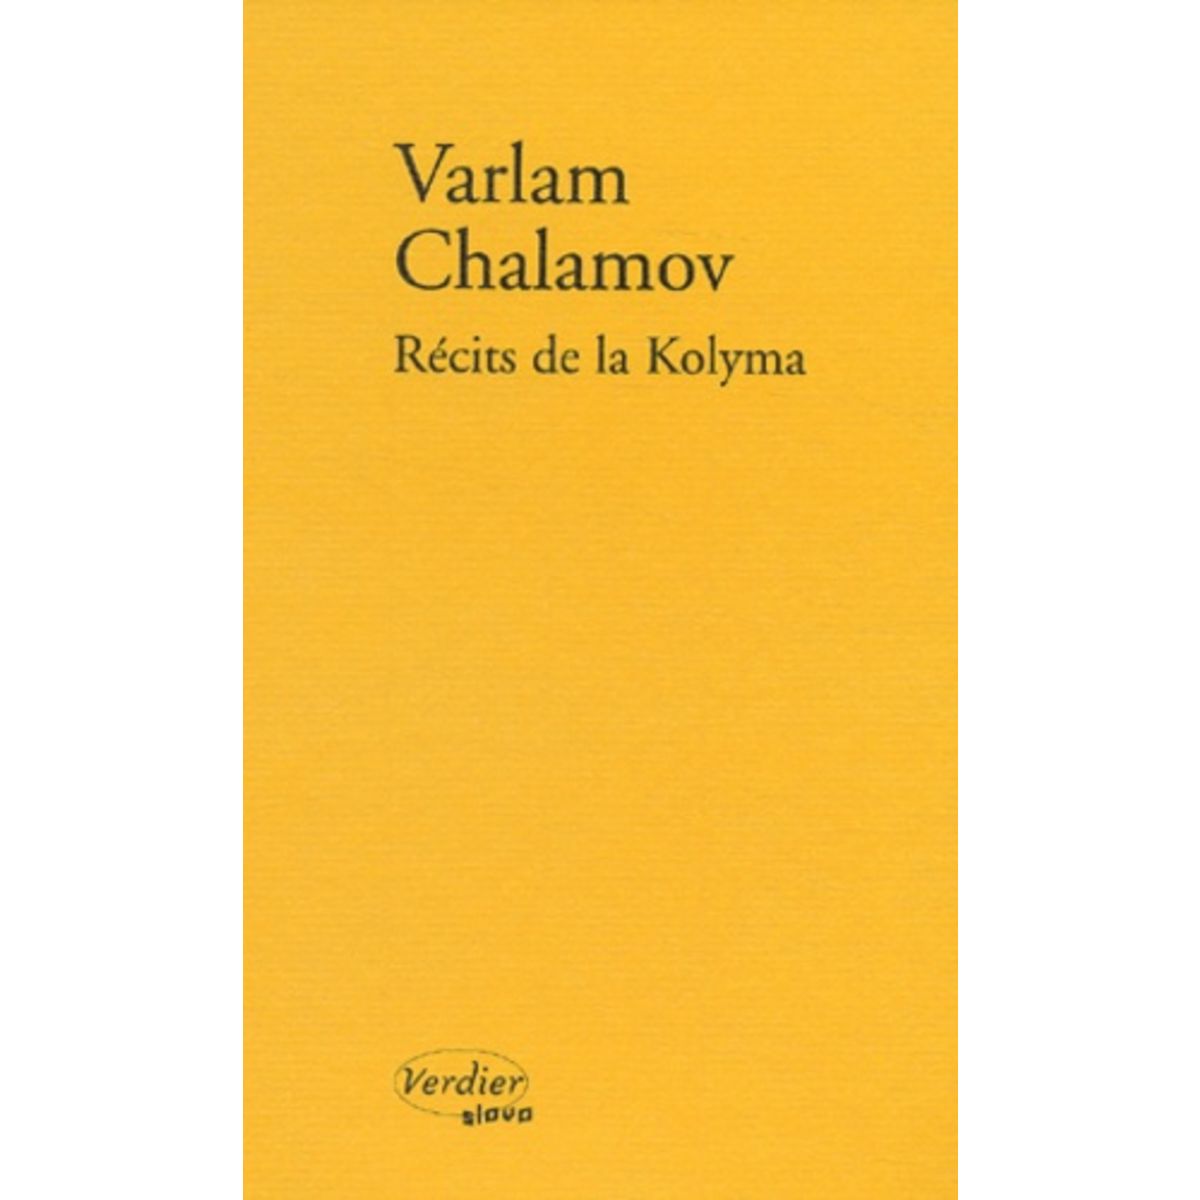  RECITS DE LA KOLYMA, Chalamov Varlam